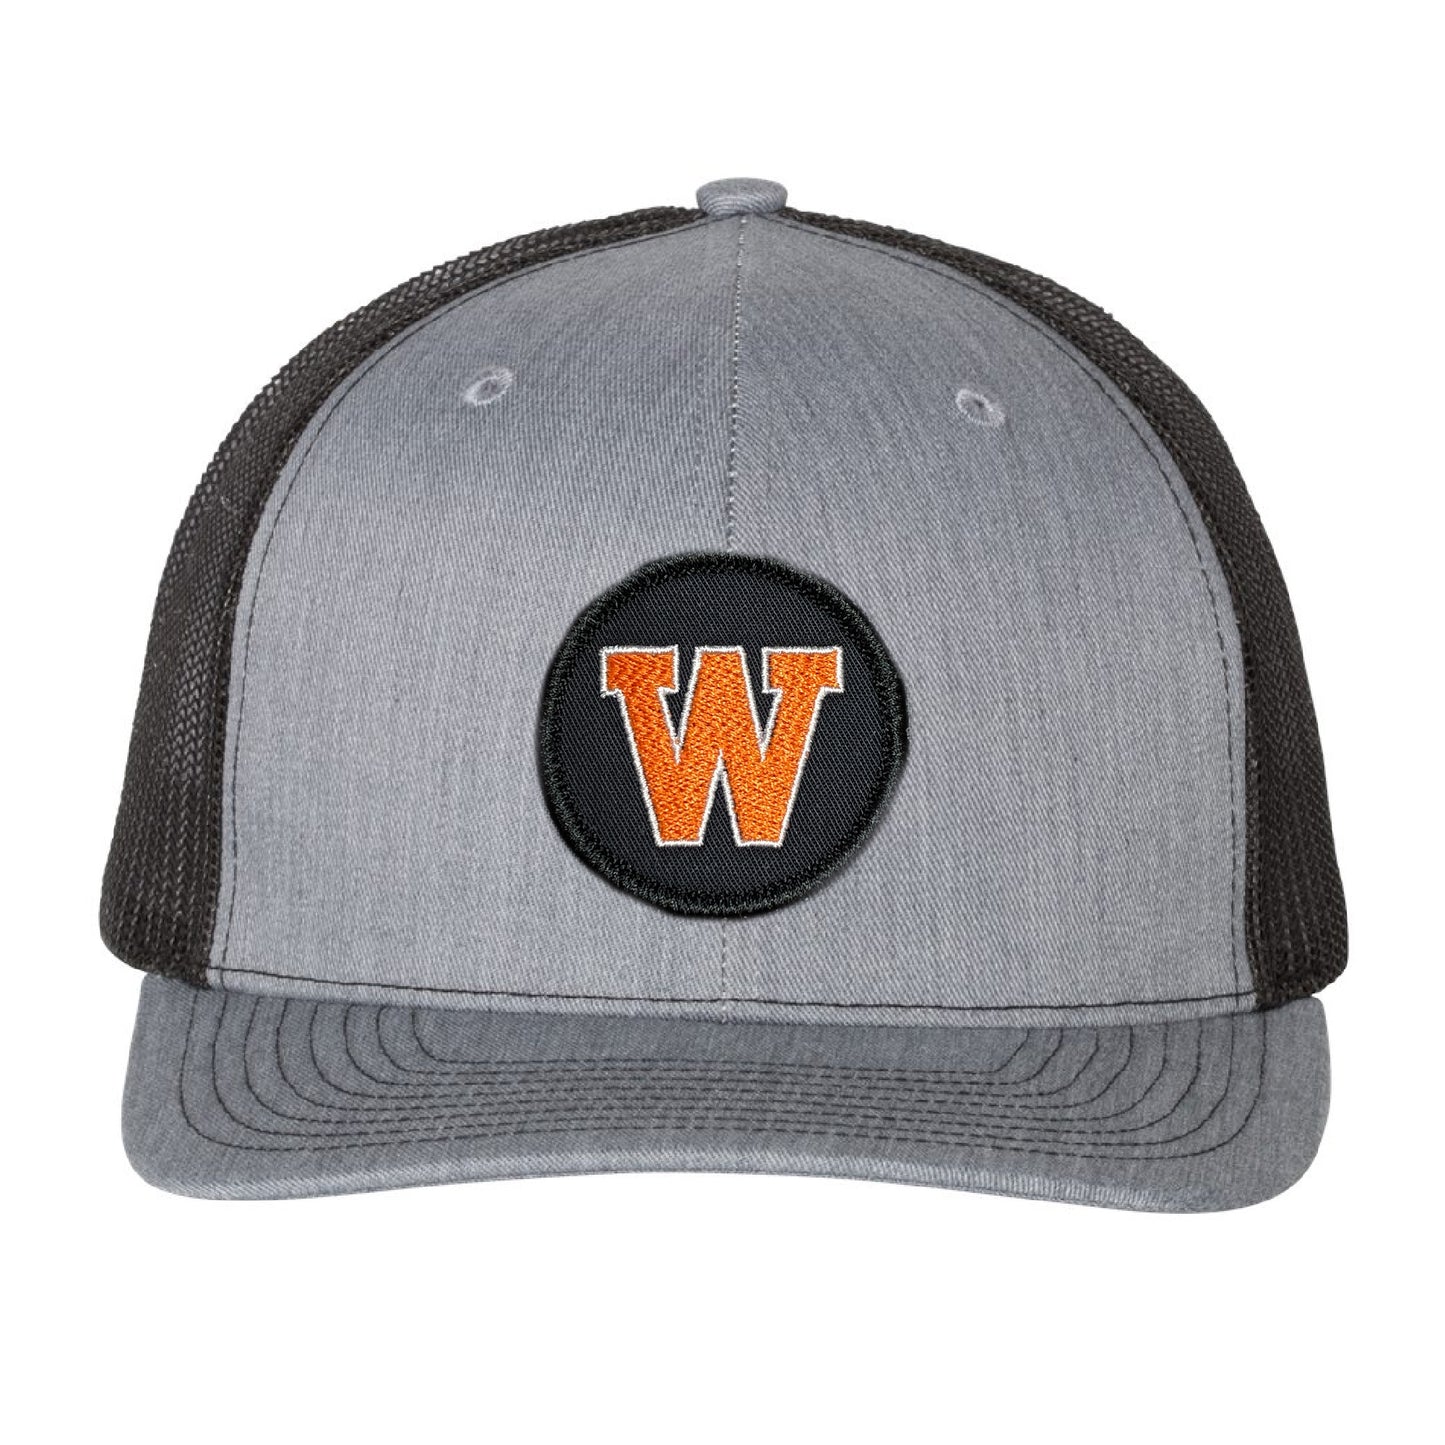 West De Pere Patched Snapback Low-Profile Gray & Black Trucker Hat